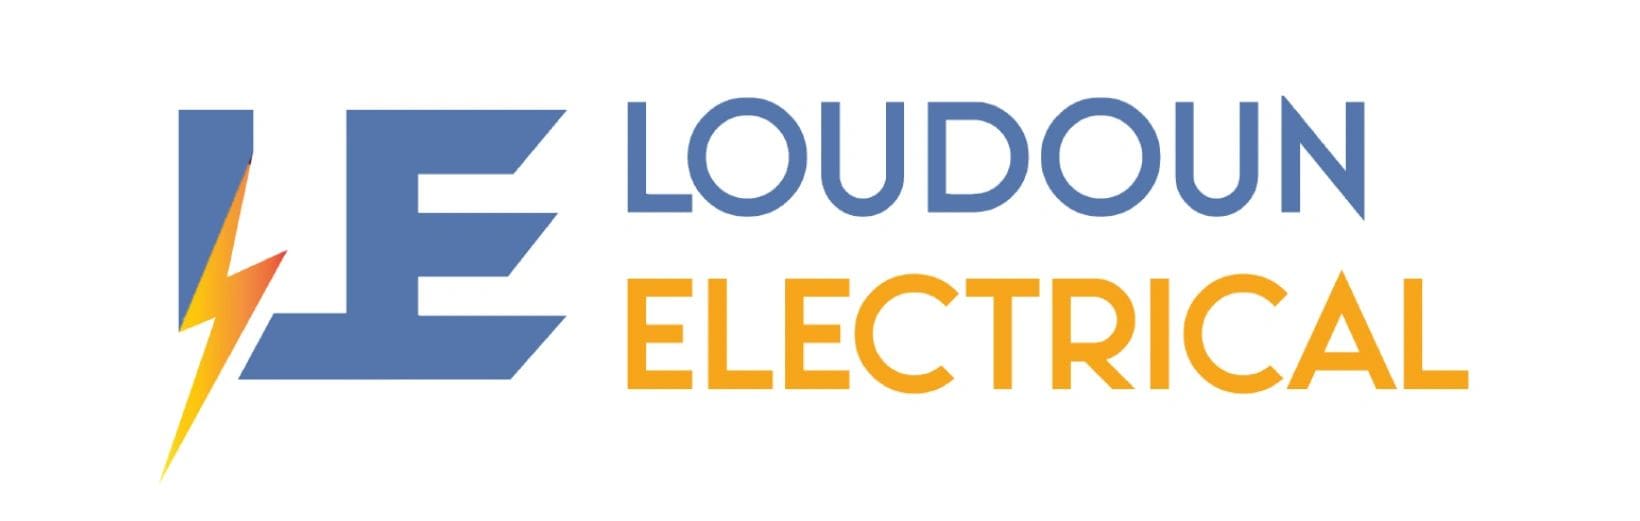 Loudoun Electrical